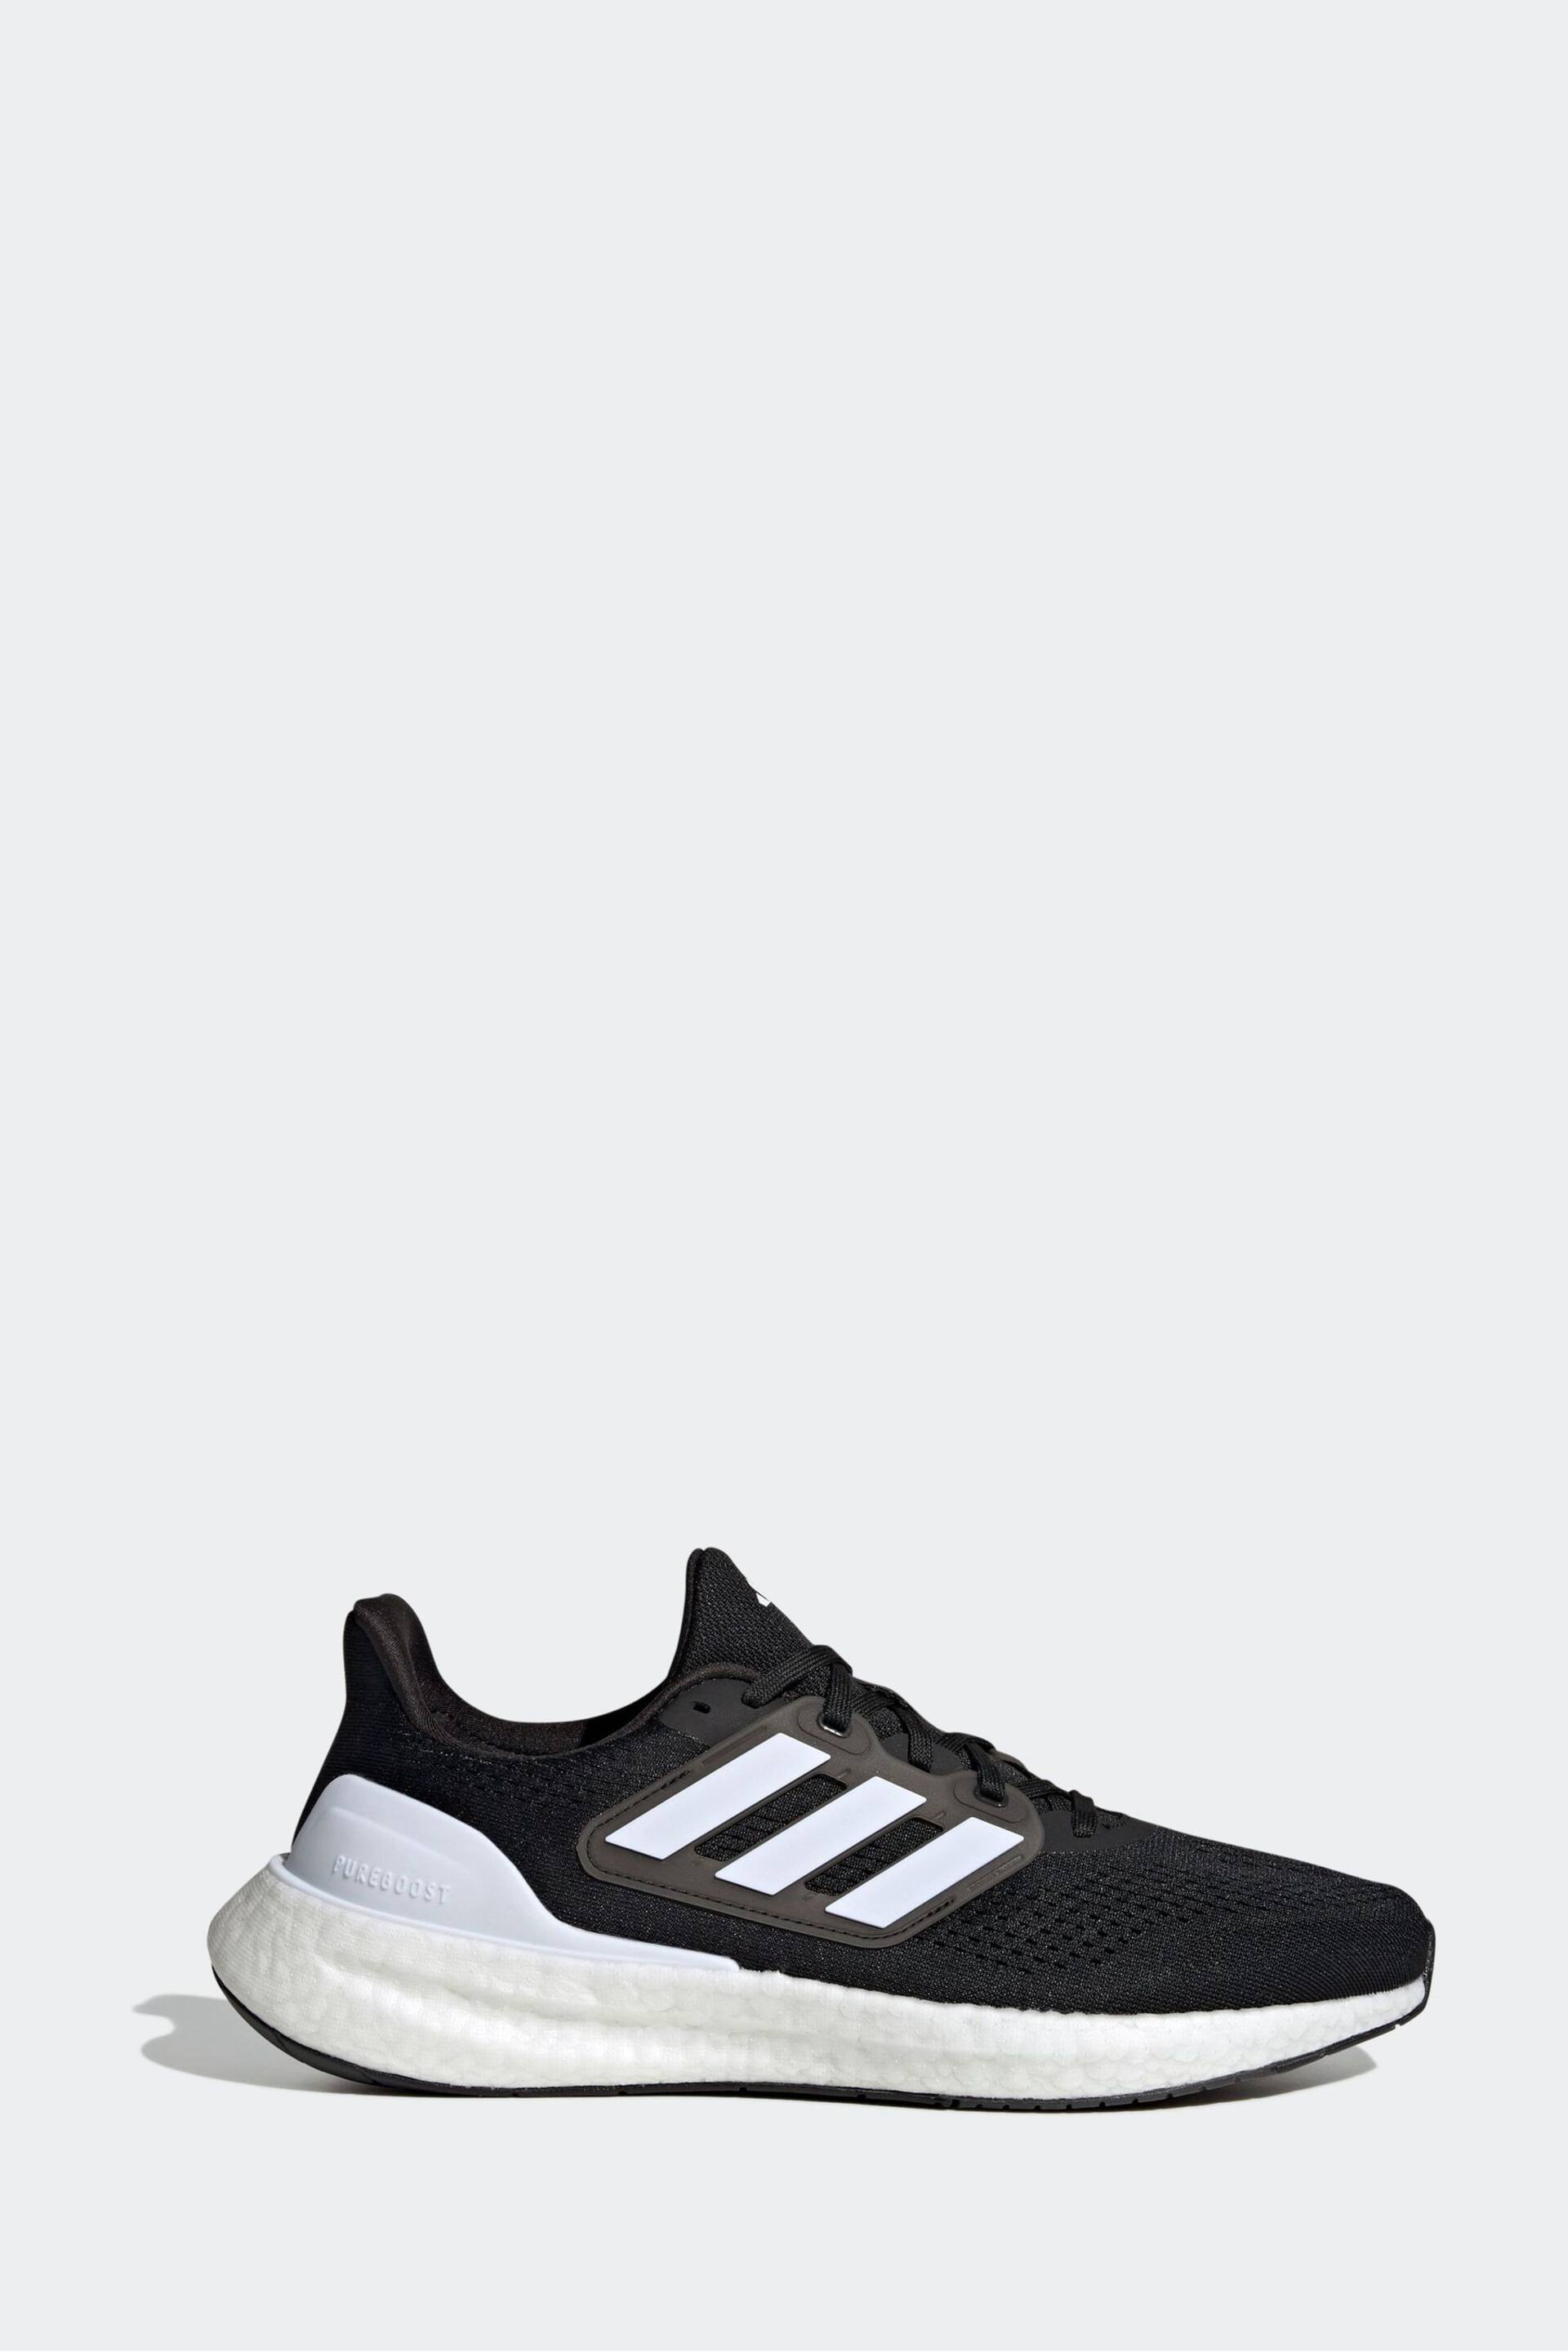 adidas Black/White Pureboost 23 Trainer - Image 1 of 9